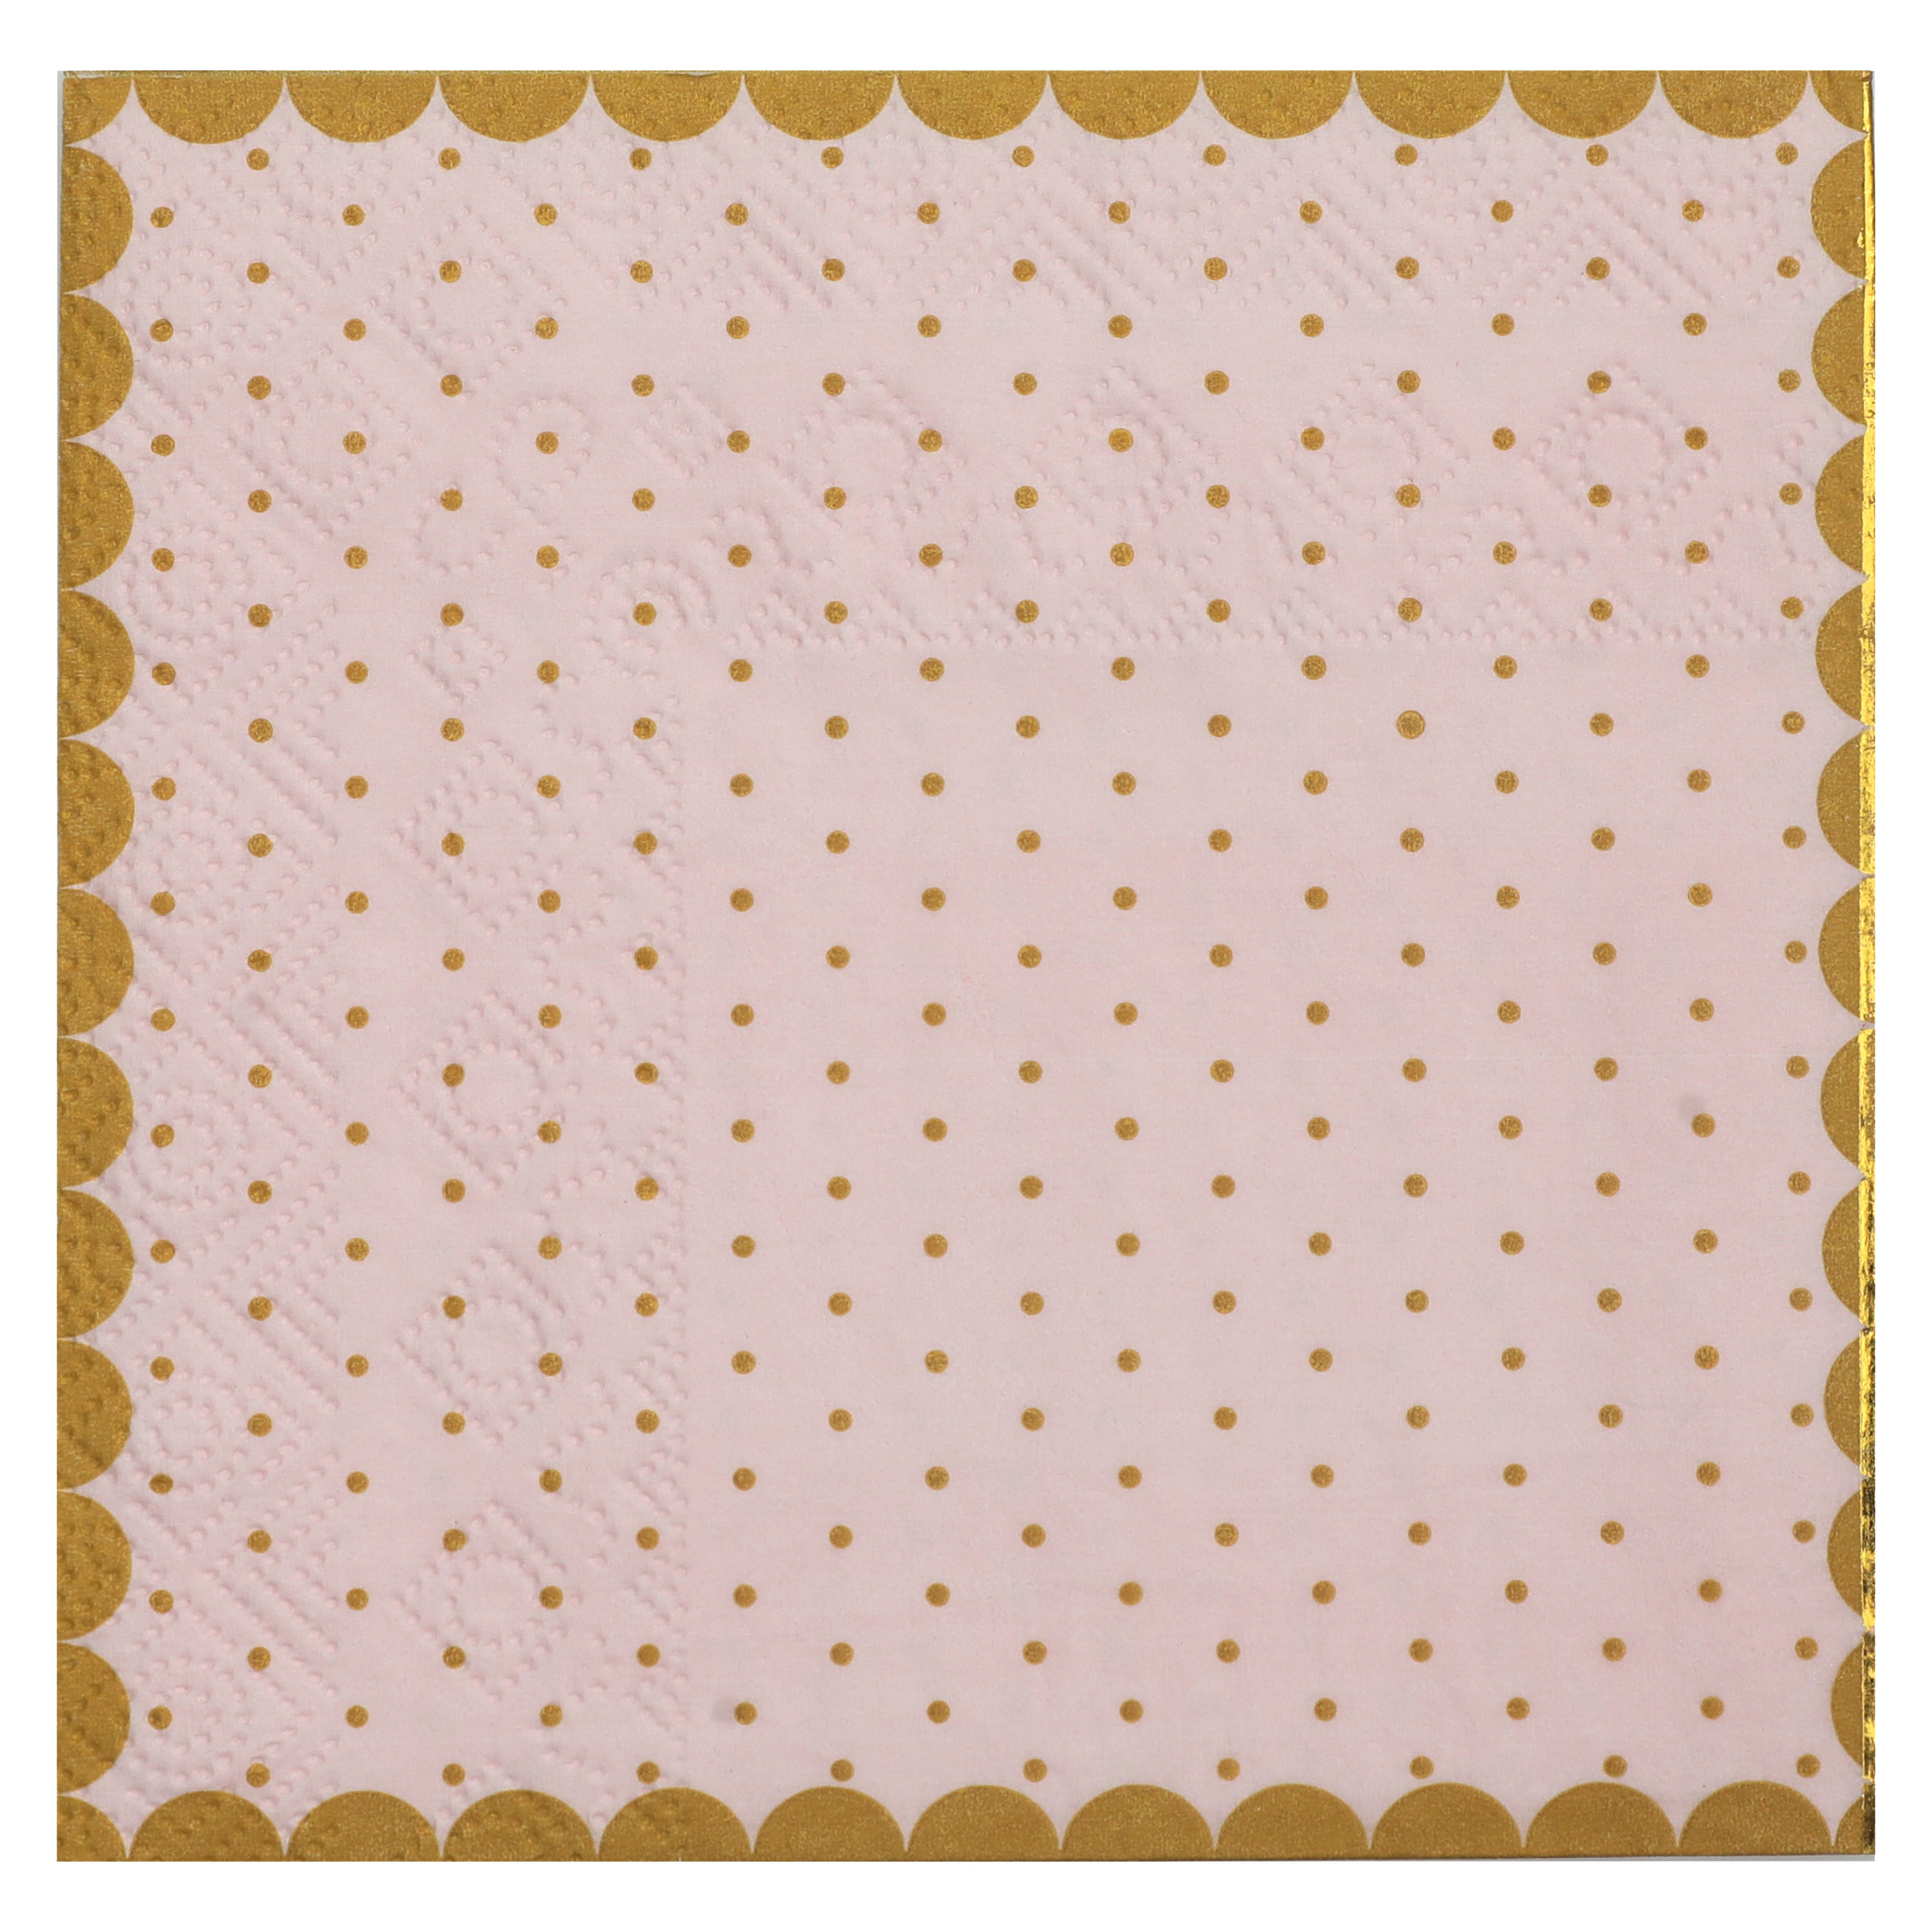 Santex feest servetten - stippen - 20x stuks - 25 x 25 cm - papier - roze/goud